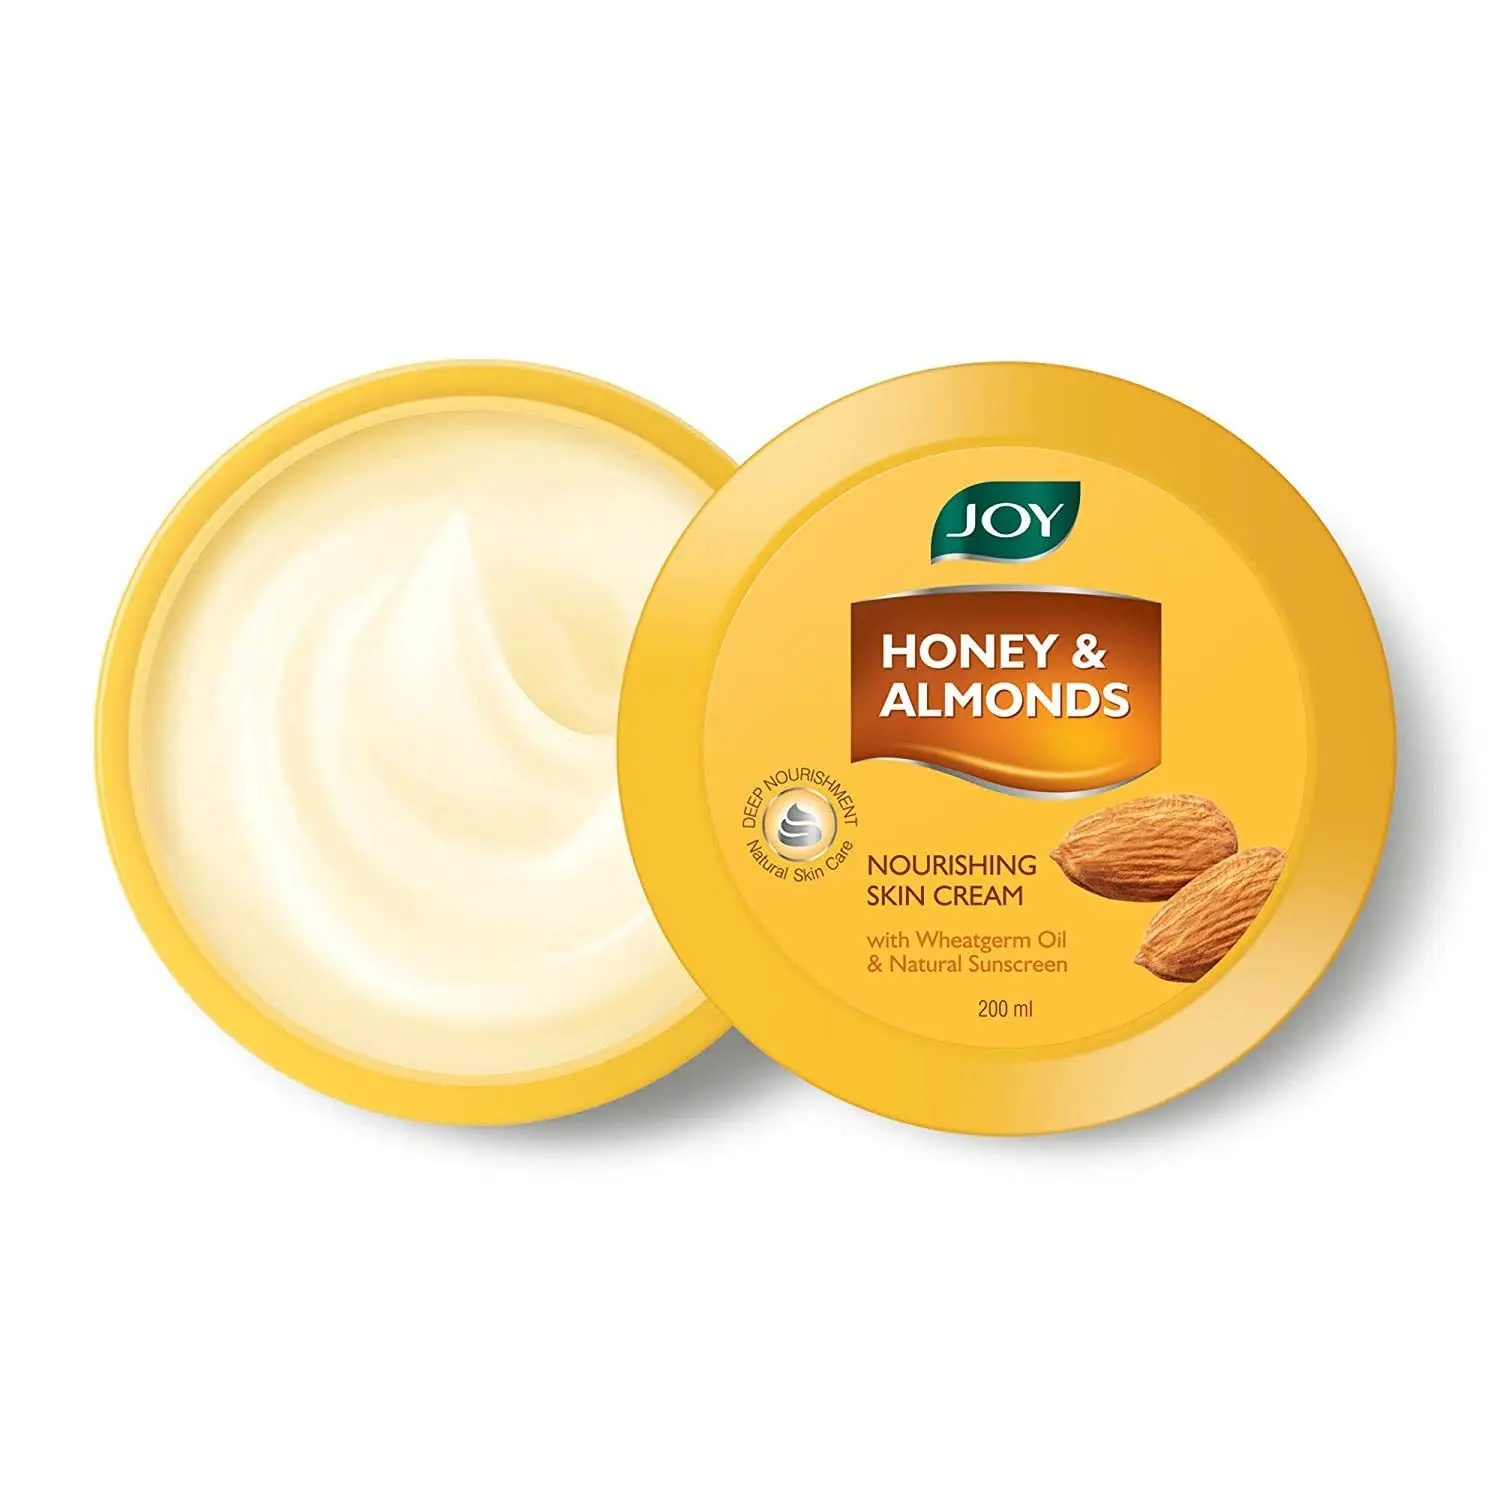 Joy Honey & Almonds Nourishing Skin Cream, For Normal to Dry Skin 200 ml